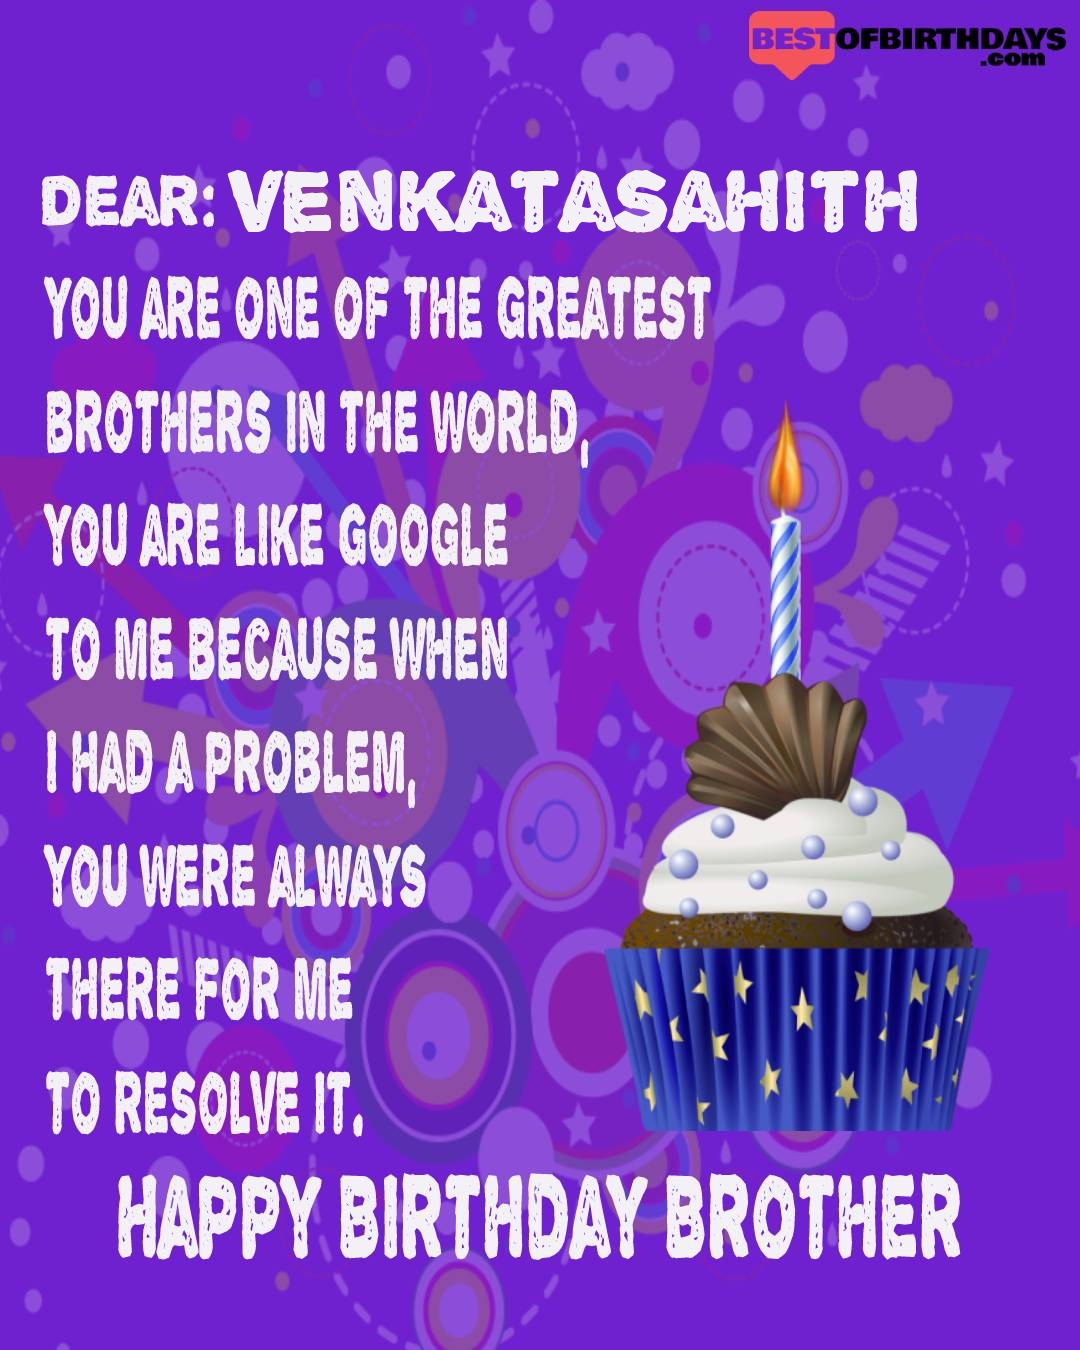 Happy birthday venkatasahith bhai brother bro